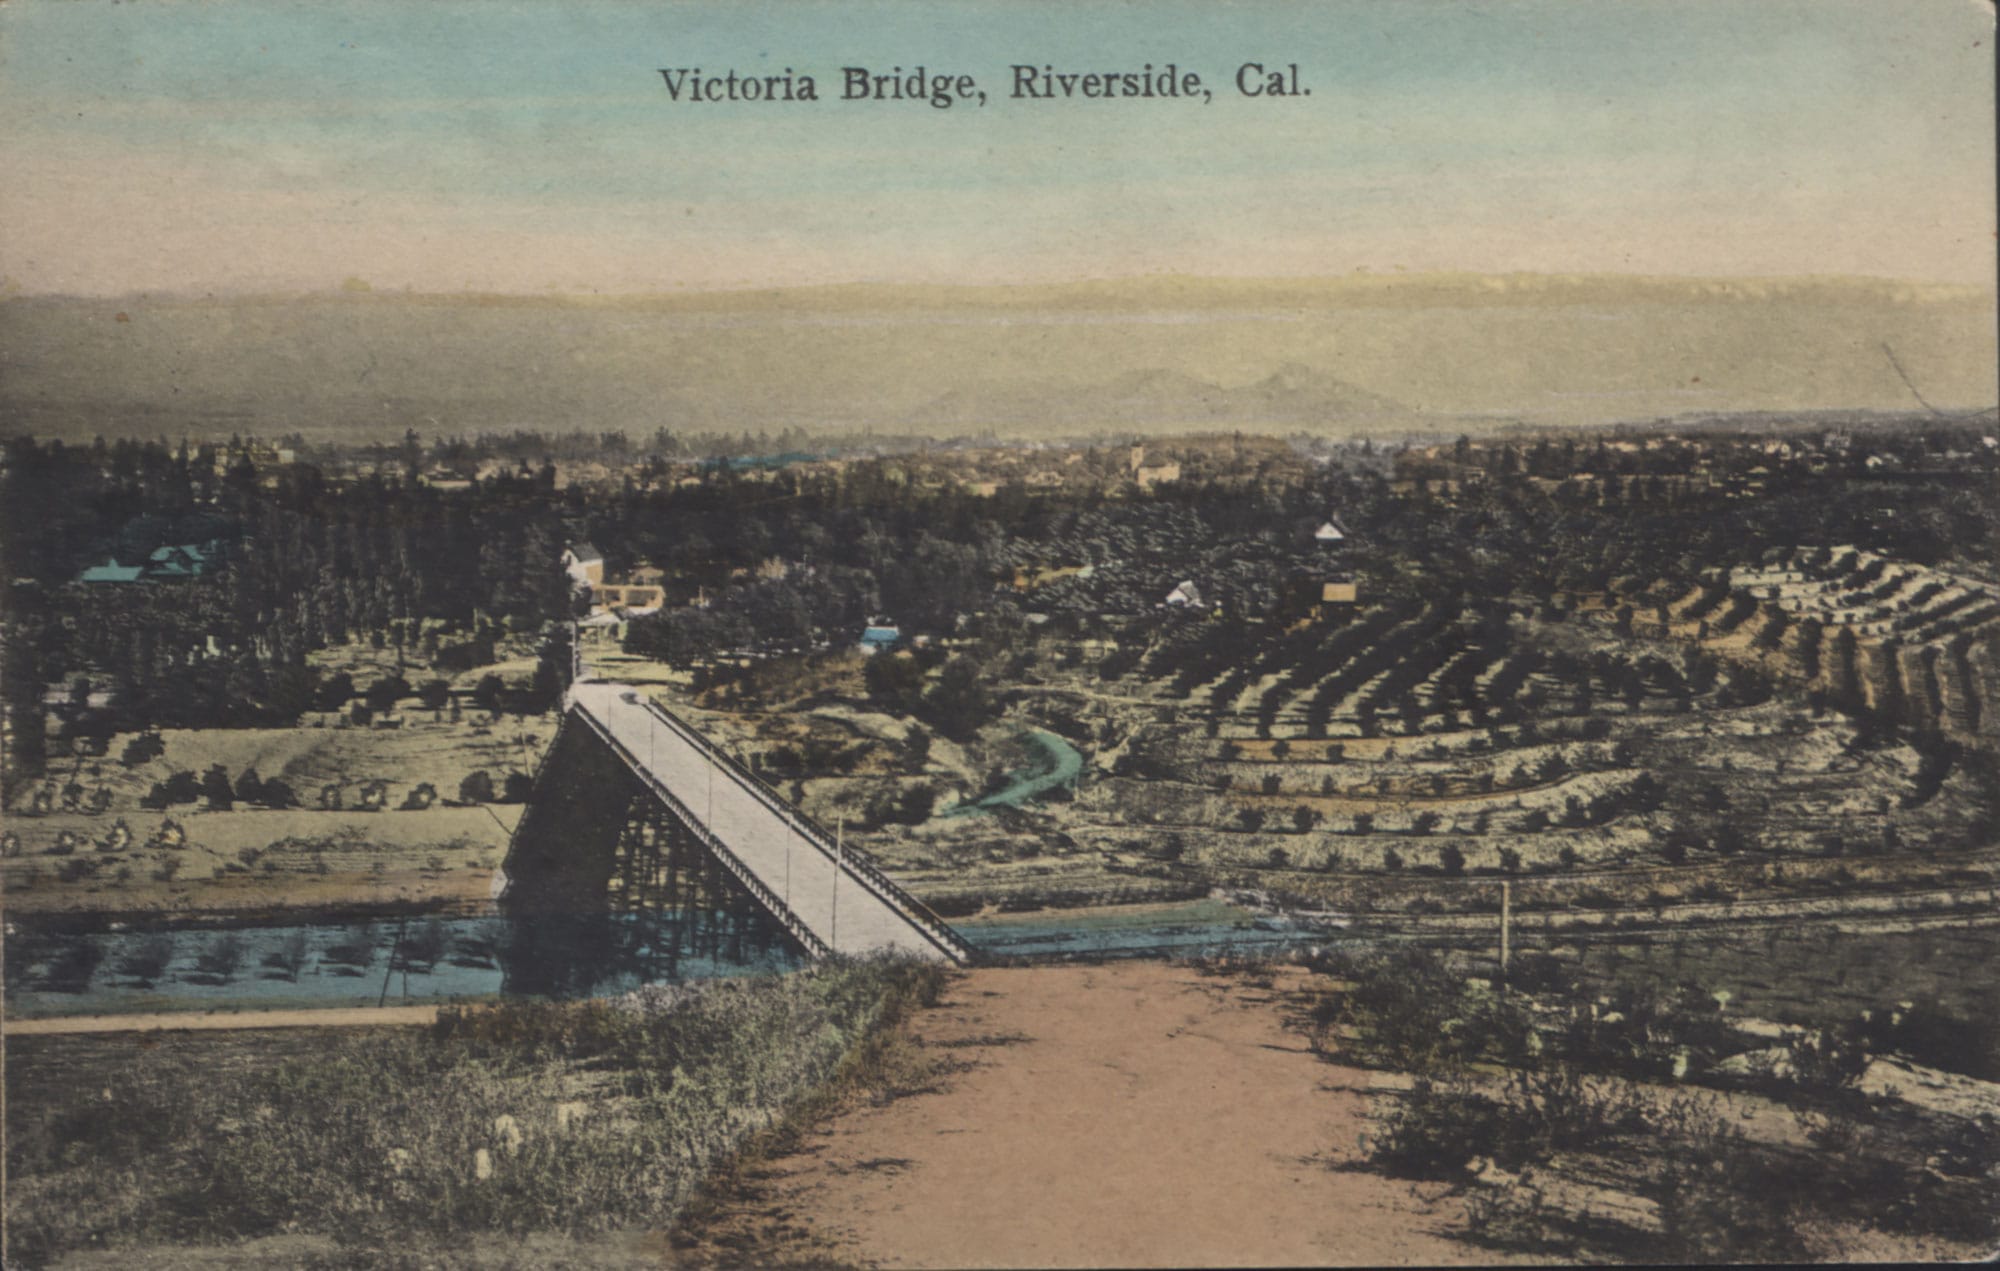 Bridging Riverside: The story of Victoria Bridge's role in city unity